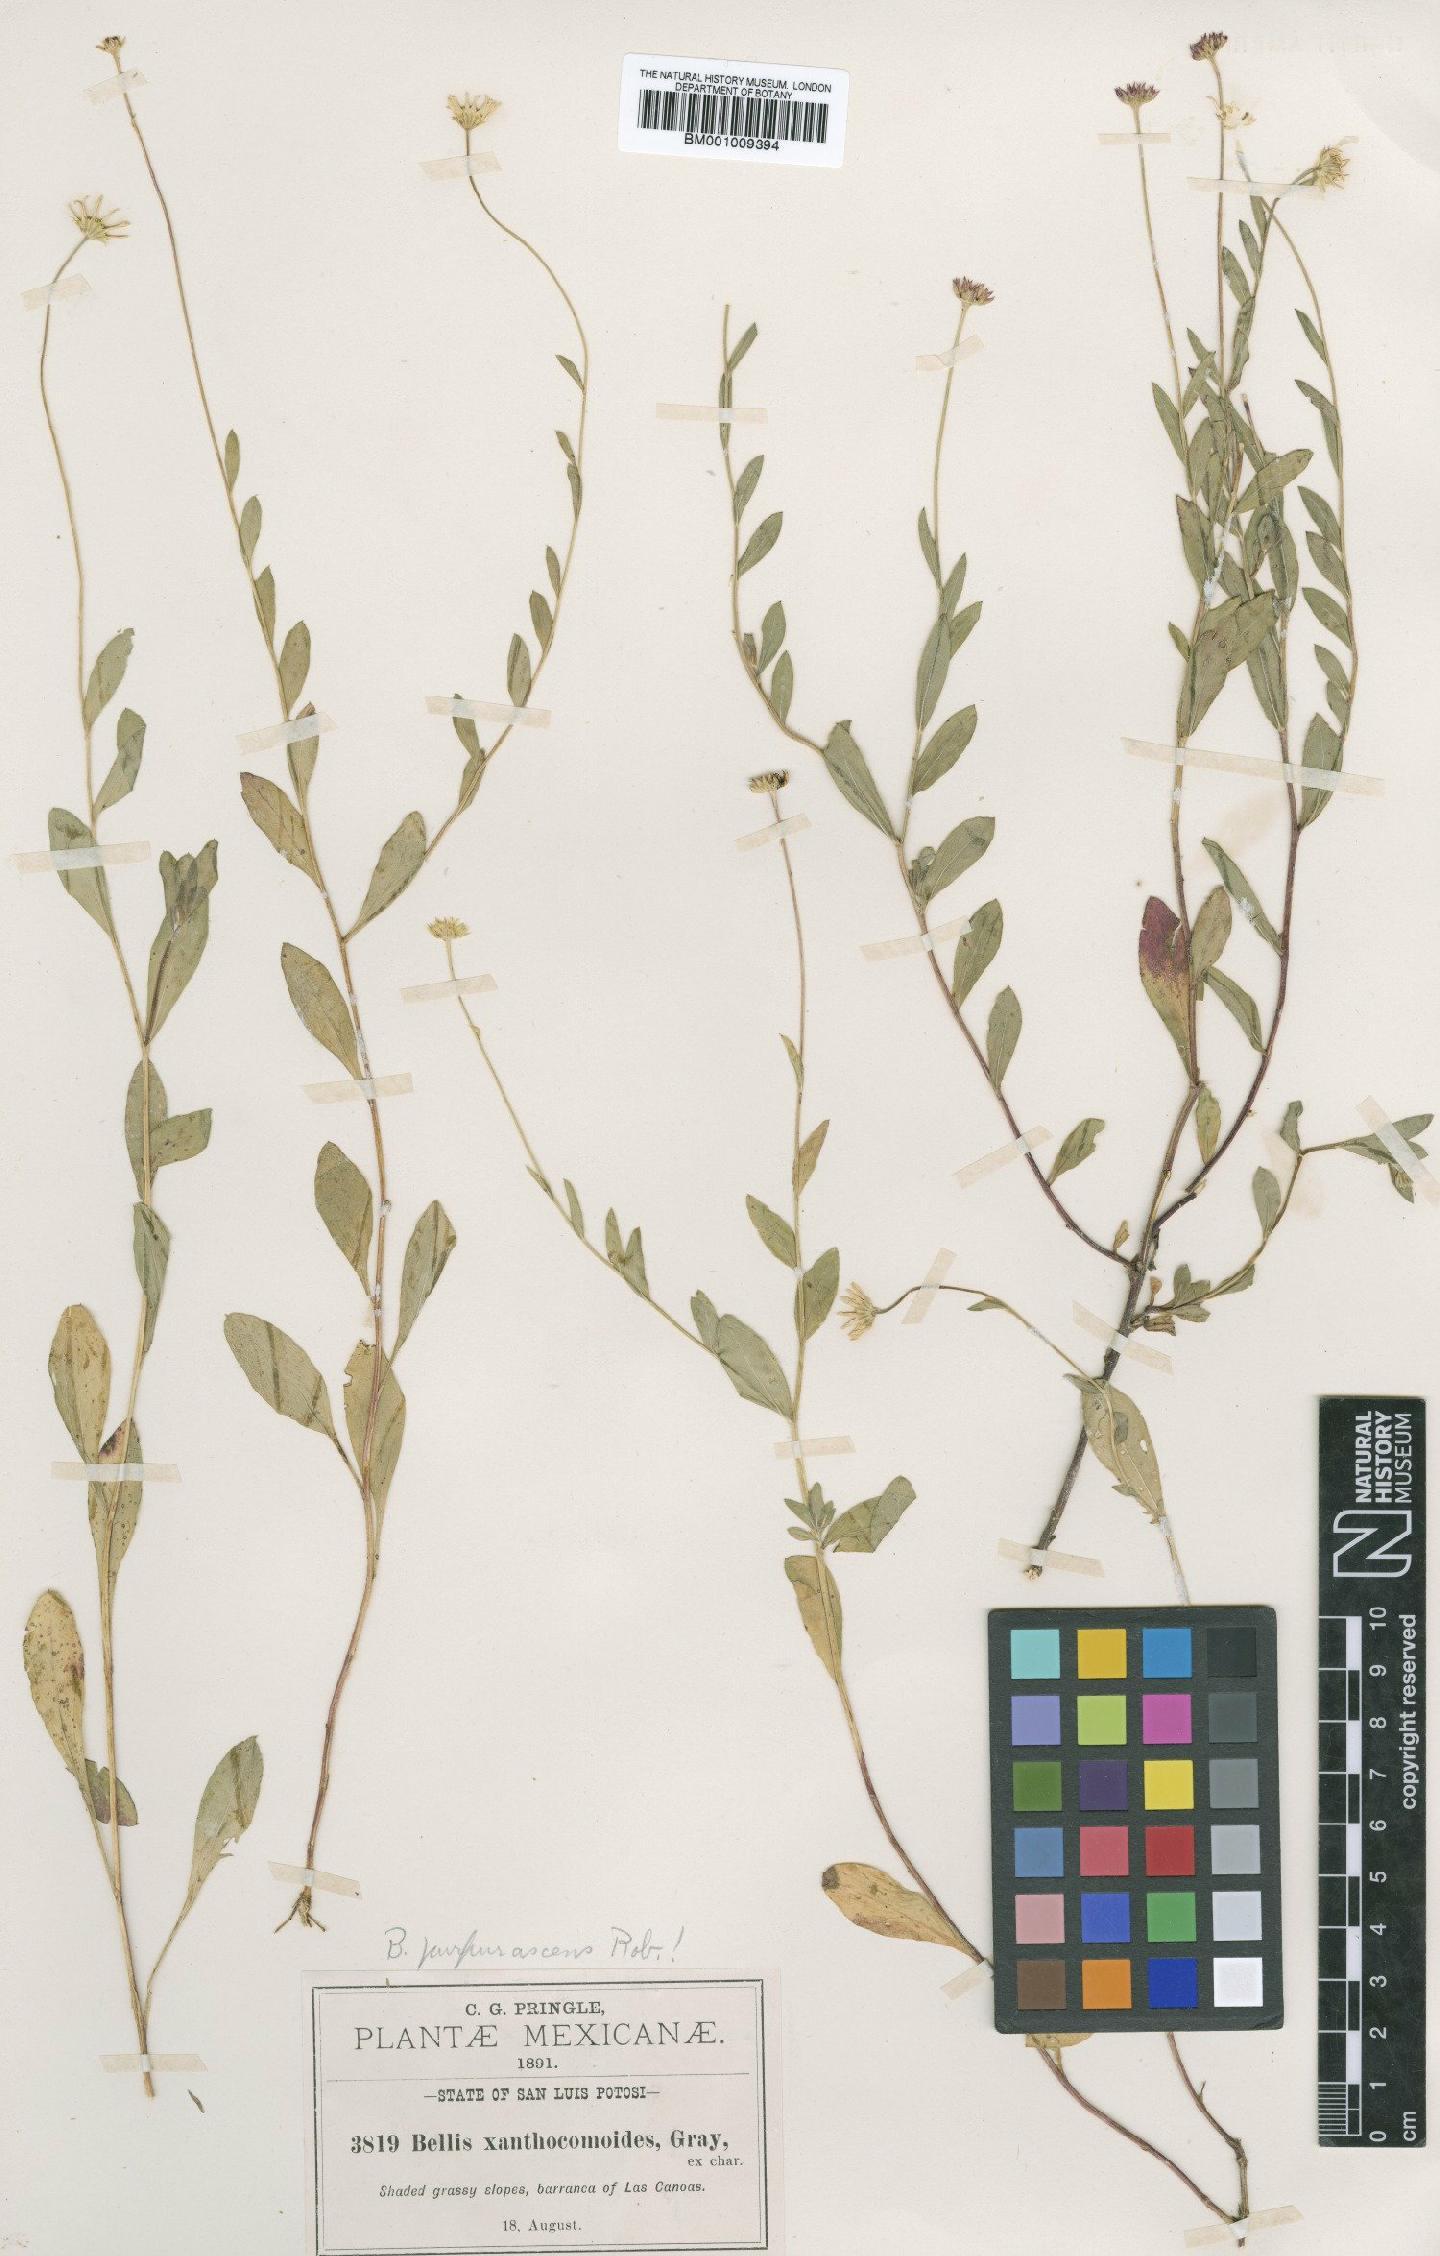 To NHMUK collection (Astranthium purpurascens (B.L.Rob.) Larsen; Isotype; NHMUK:ecatalogue:609203)